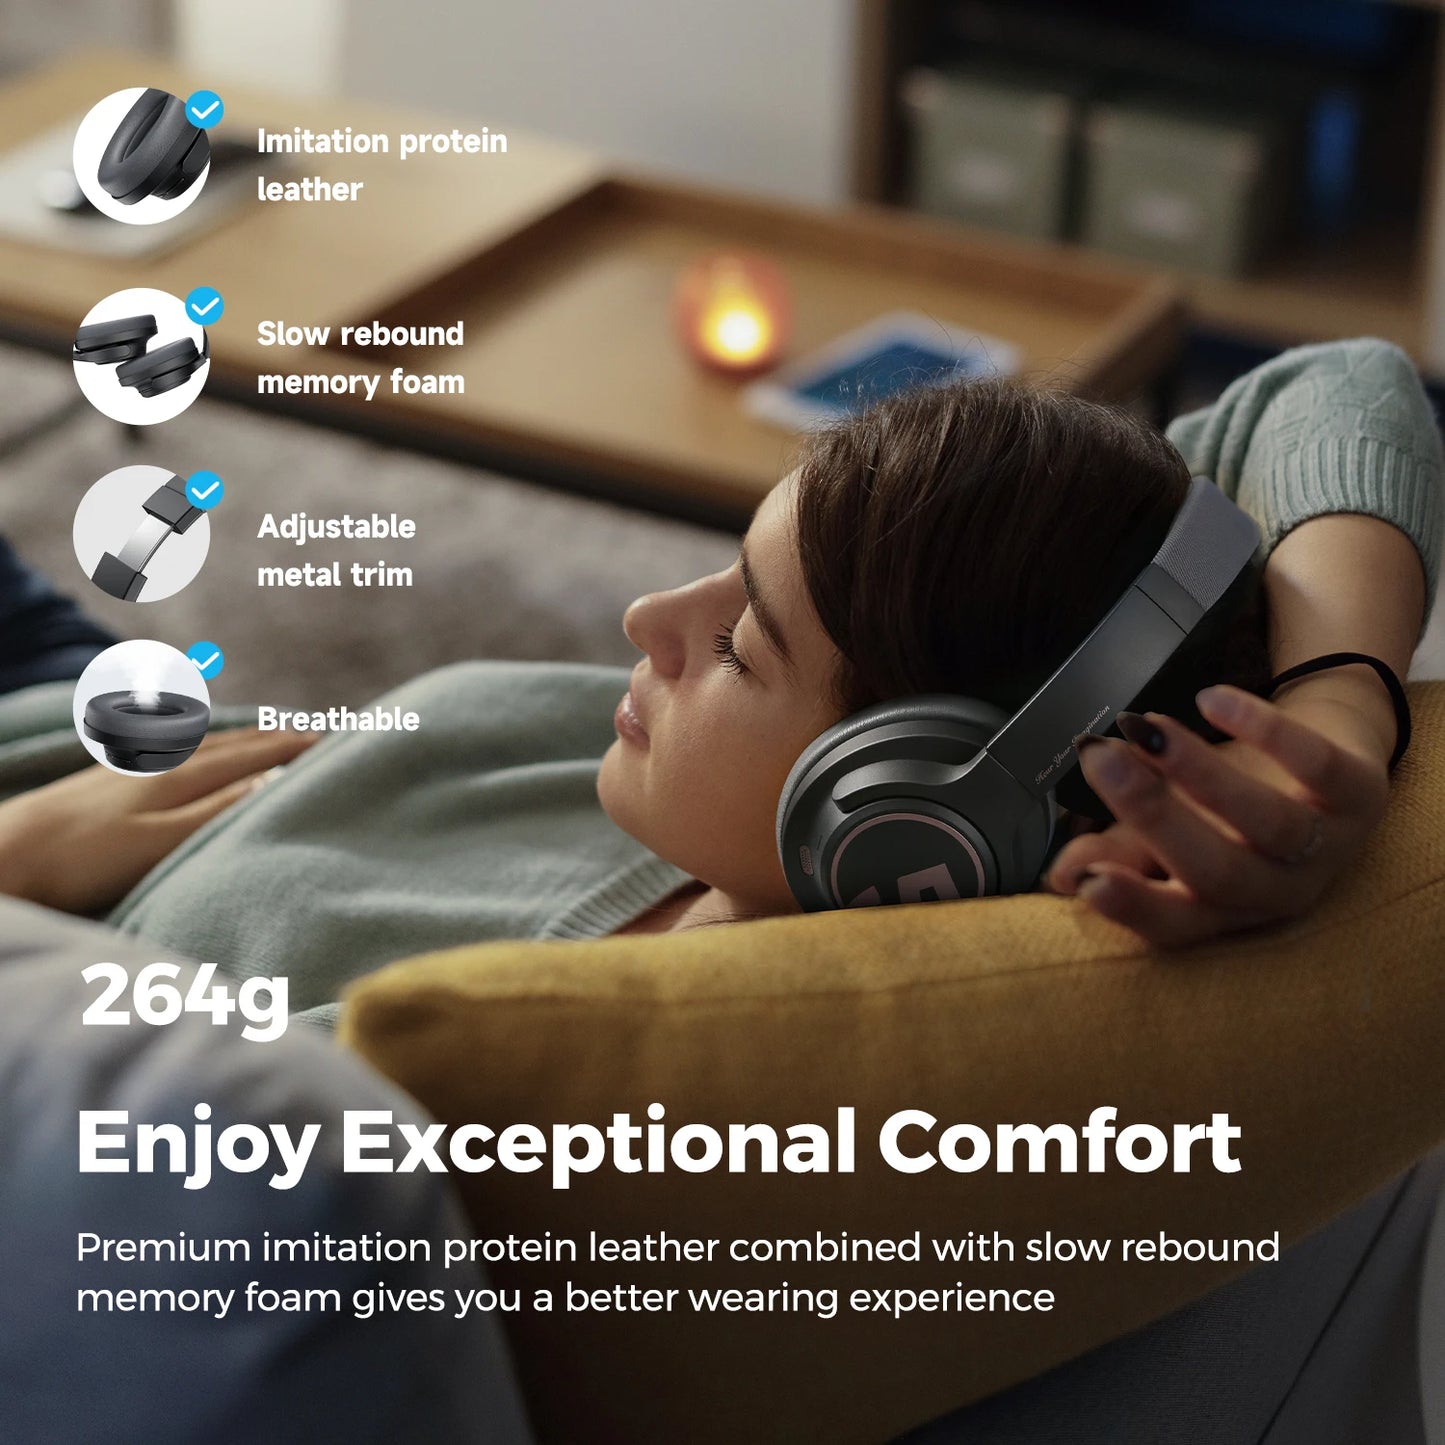 SoundPEATS Space Headphones Bluetooth 5.3 Hybrid Active Noise Cancelling Wireless Headphone - A1Smartstore®